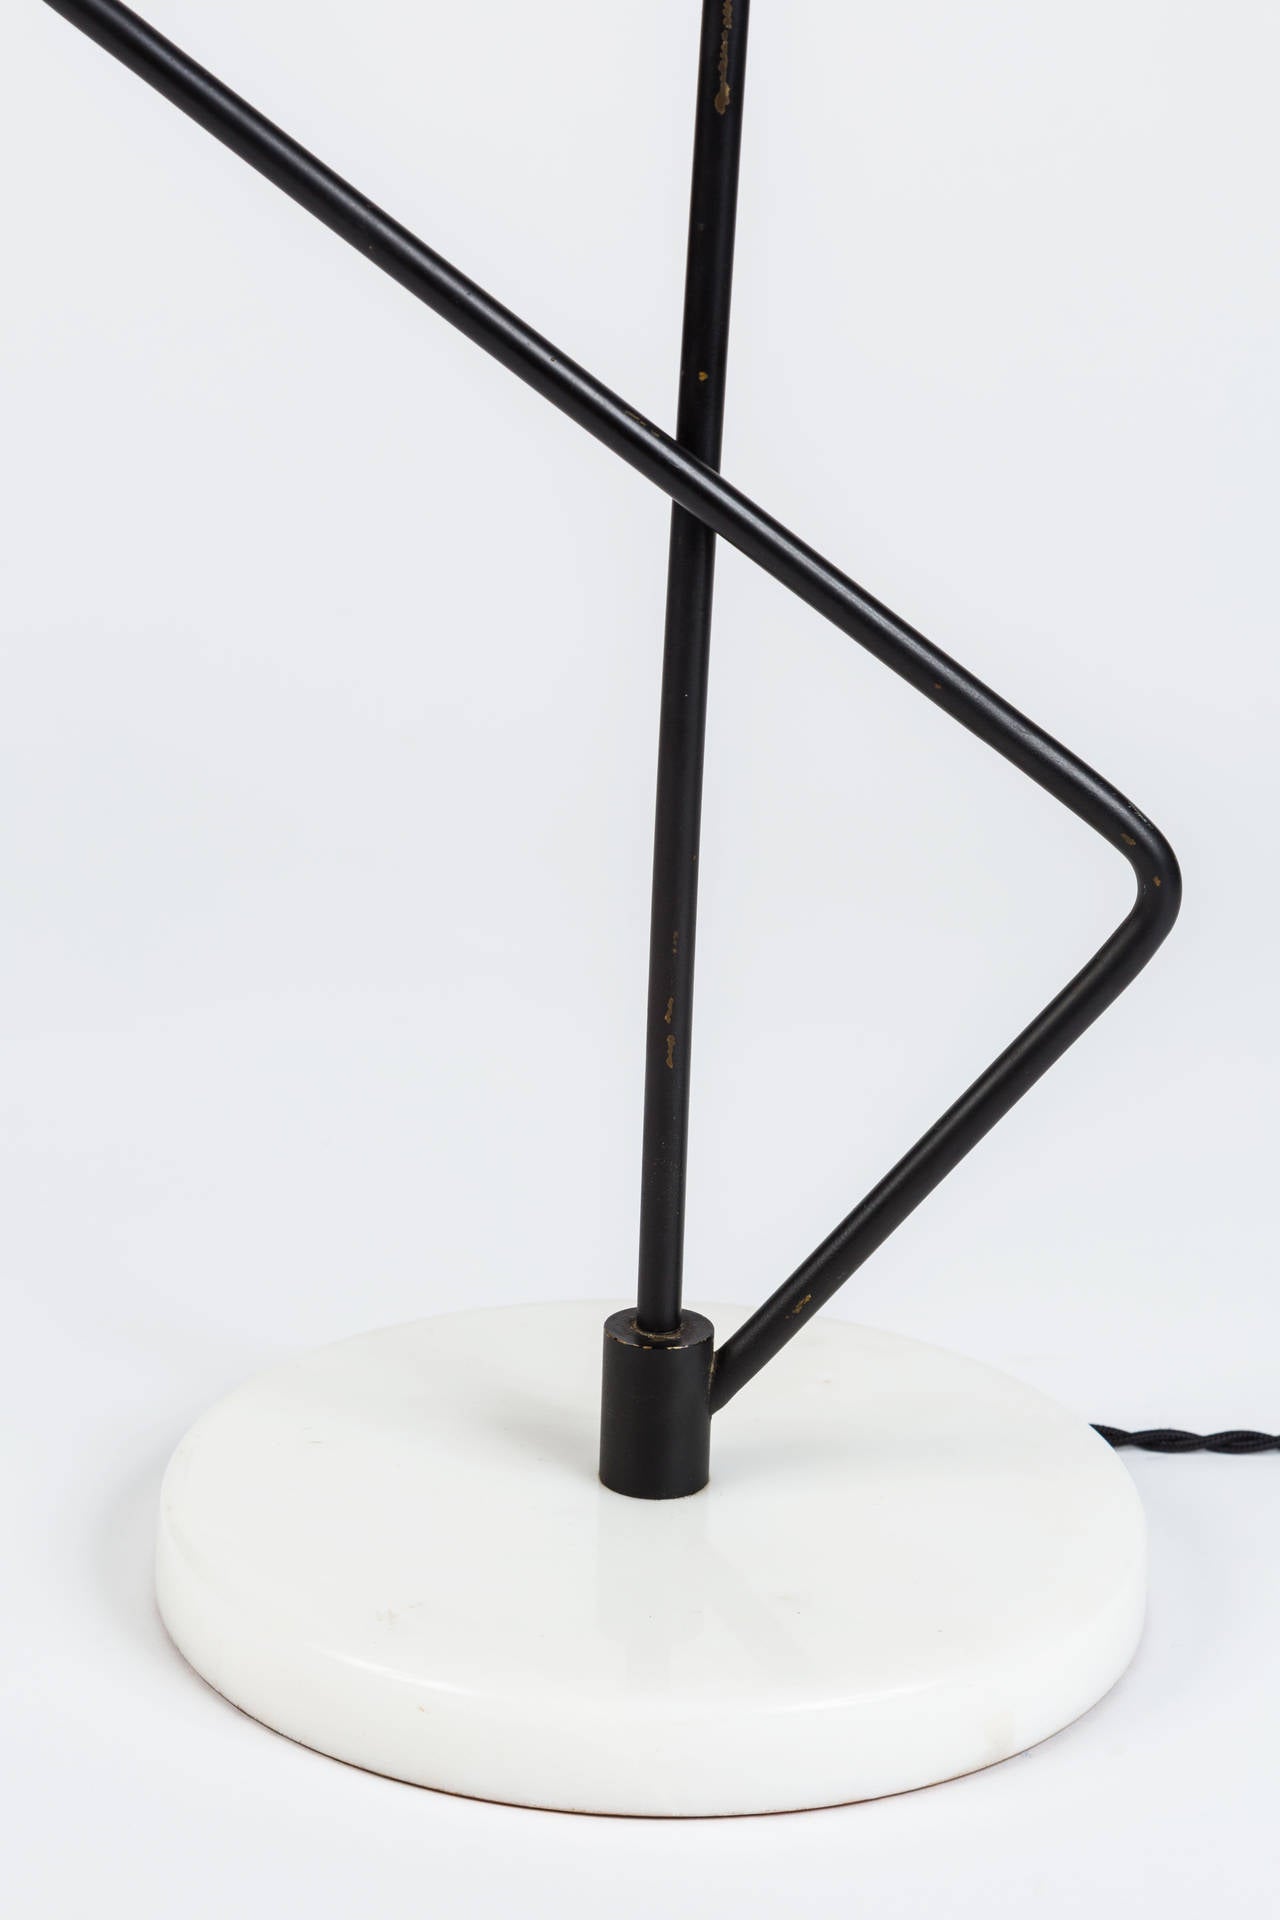 Mid-20th Century Stilnovo Table Lamp